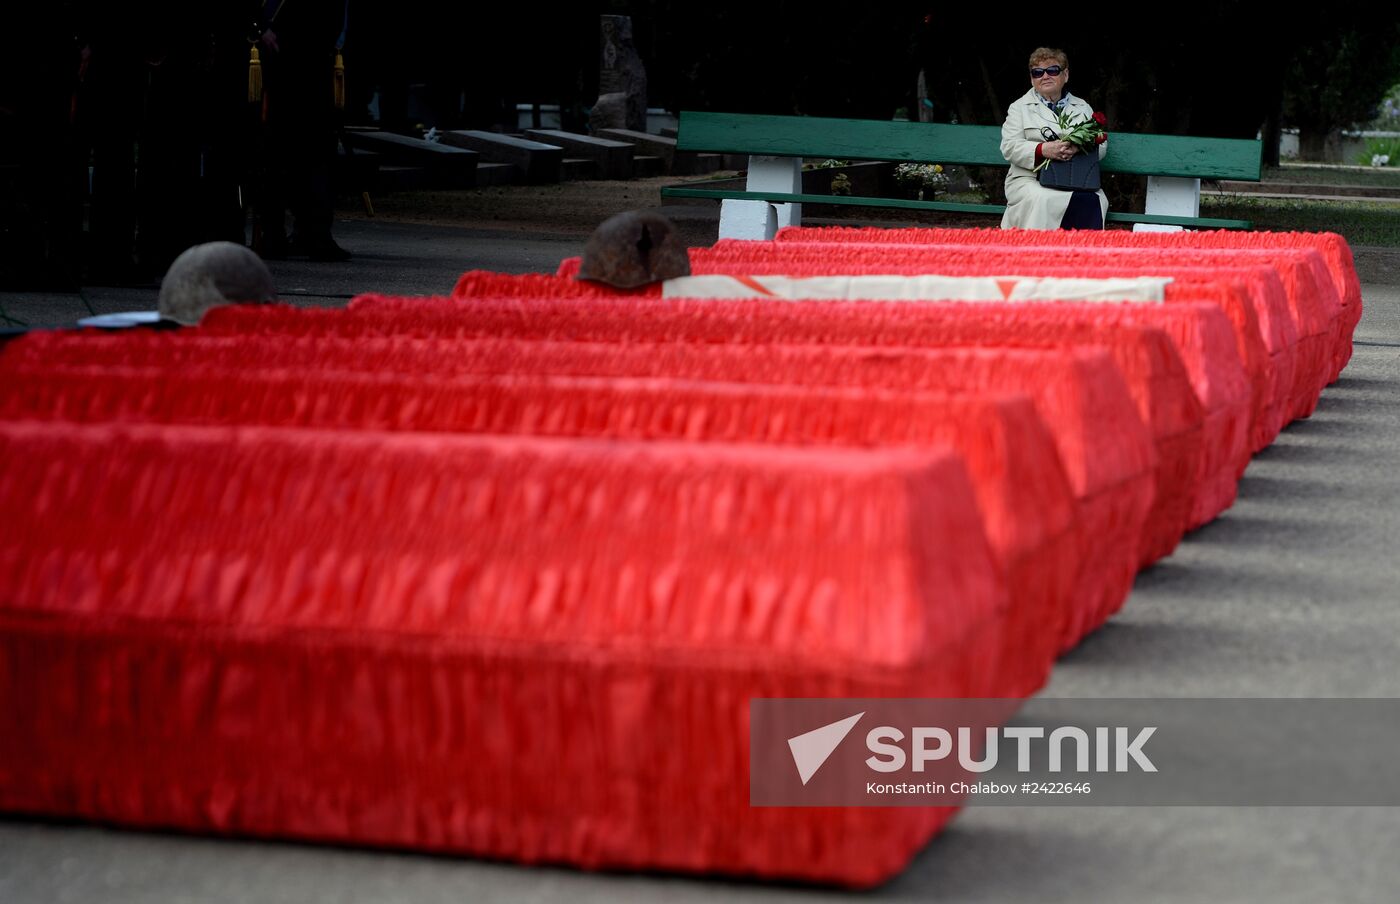 Bodies of warriors killed in Great Patriotic War buried